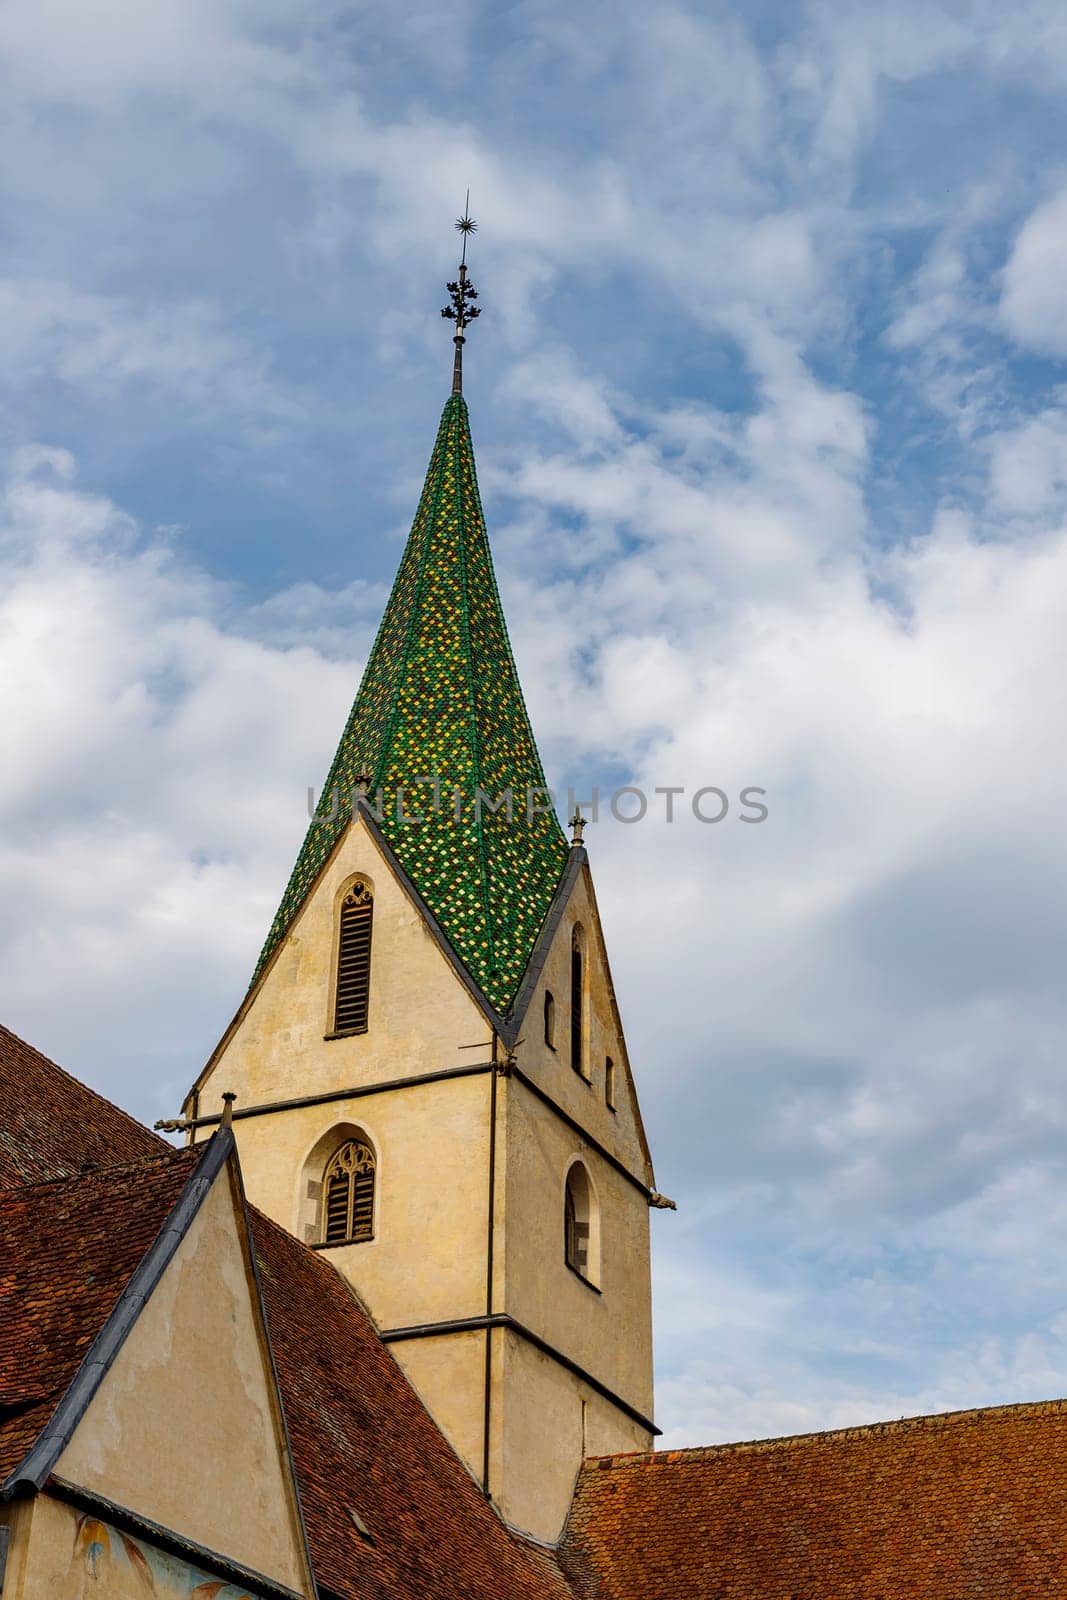 A tower of Blaubeuren Abbey in the city of Blaubeuren, Germany by EdVal